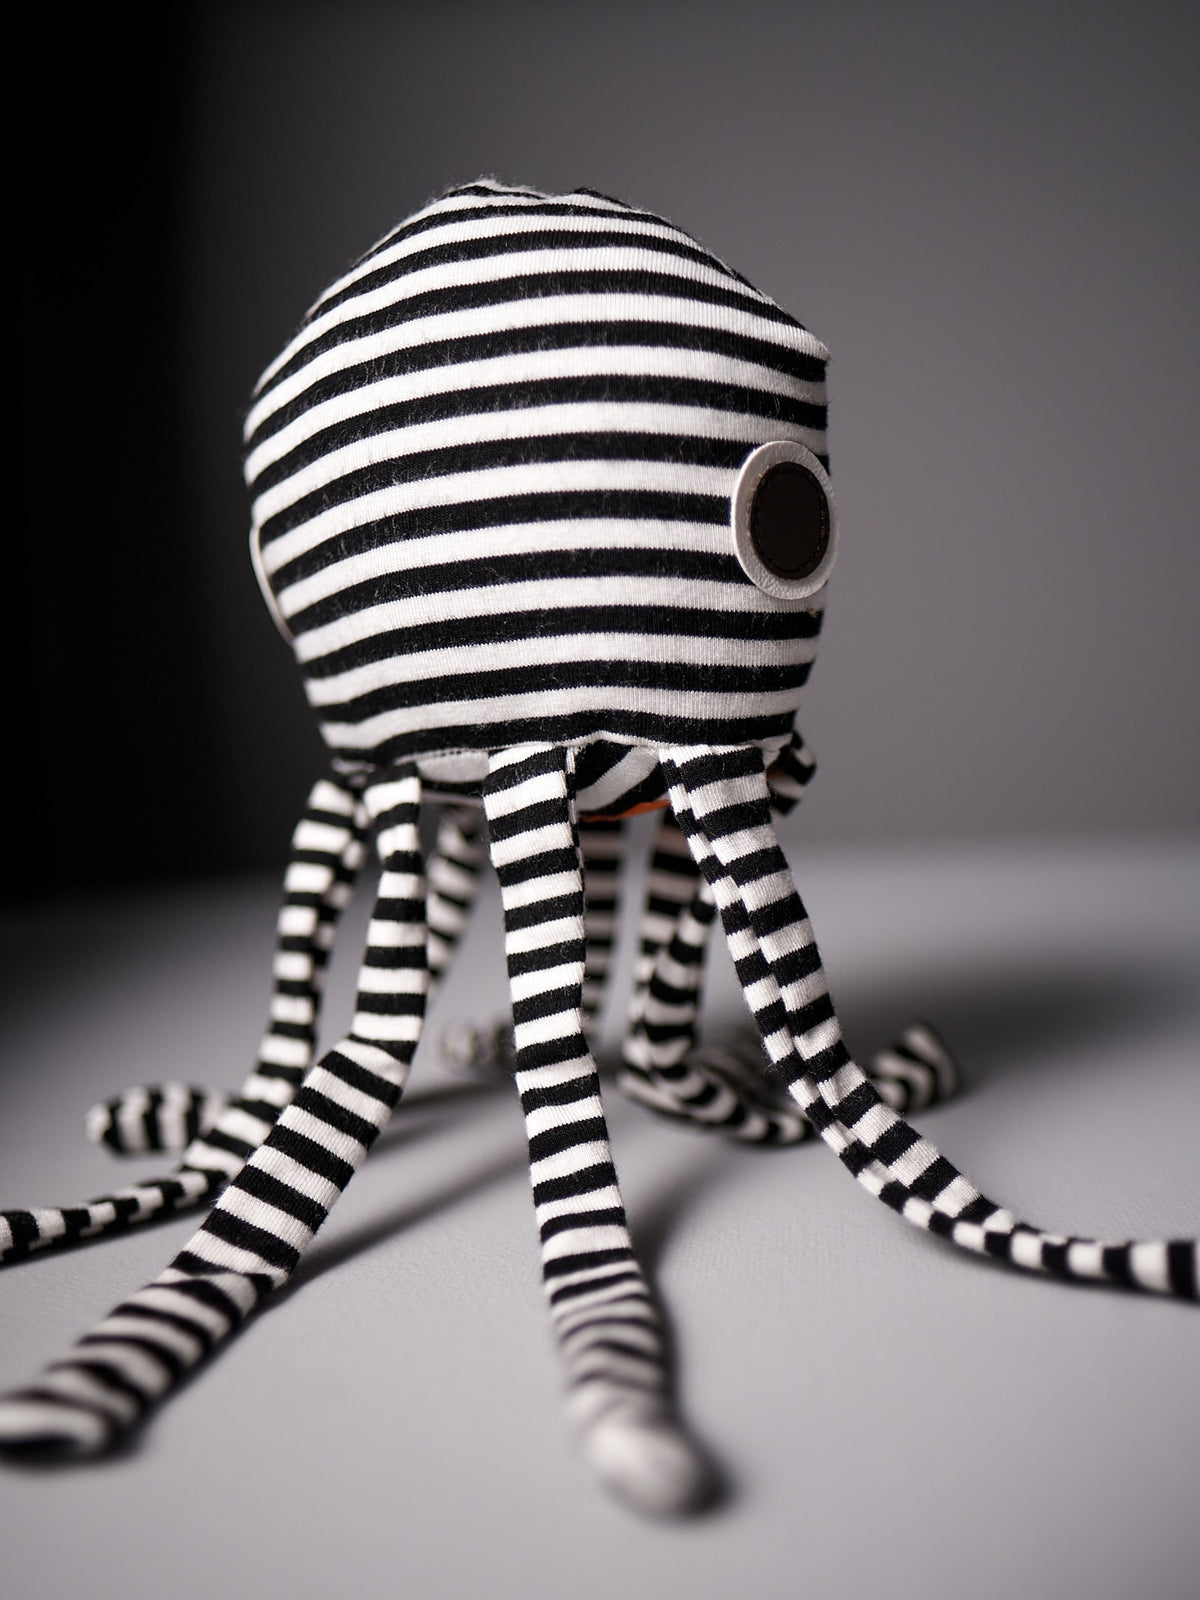 A black and white striped Émile la Pieuvre stuffed animal by Raplapla.